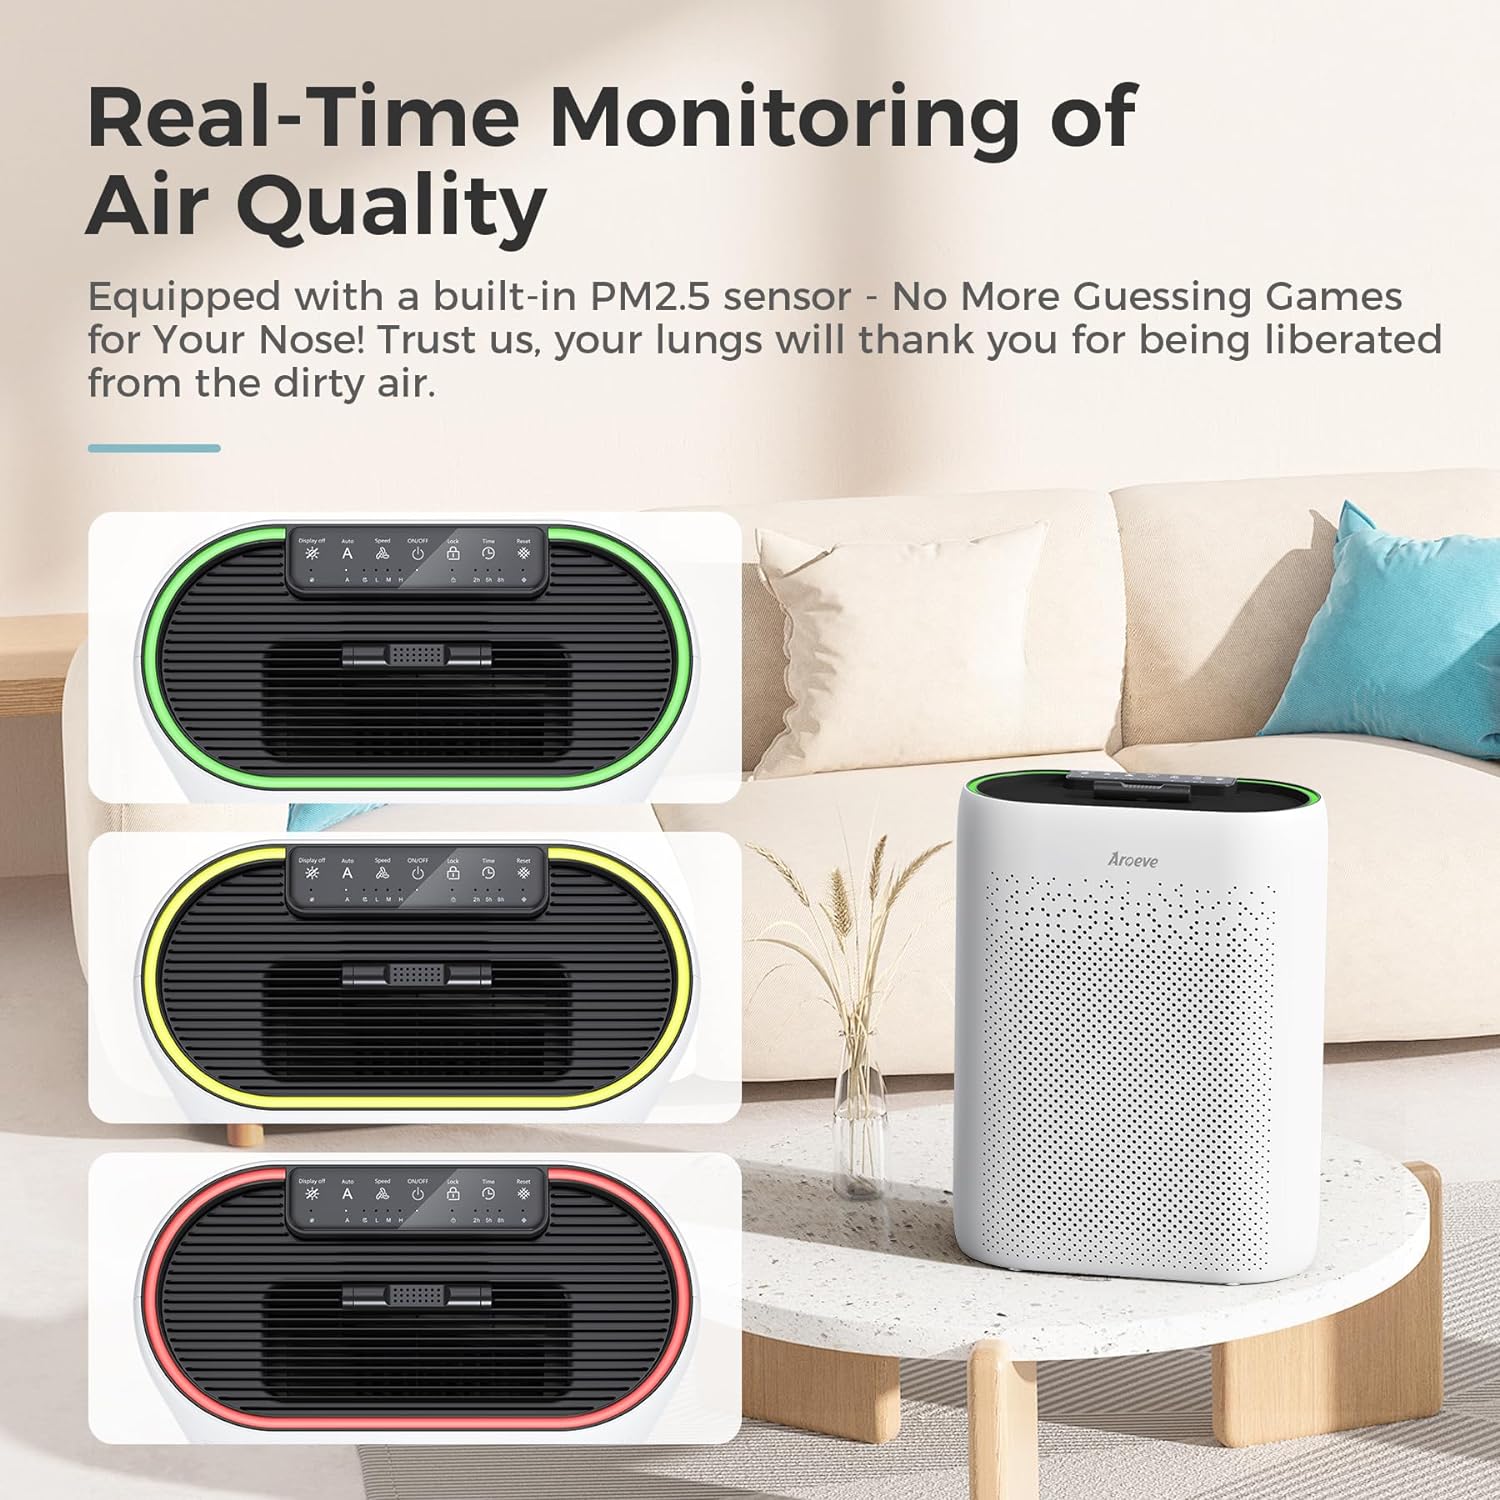 AROEVE MKD05 Air Purifier monitoring air quality